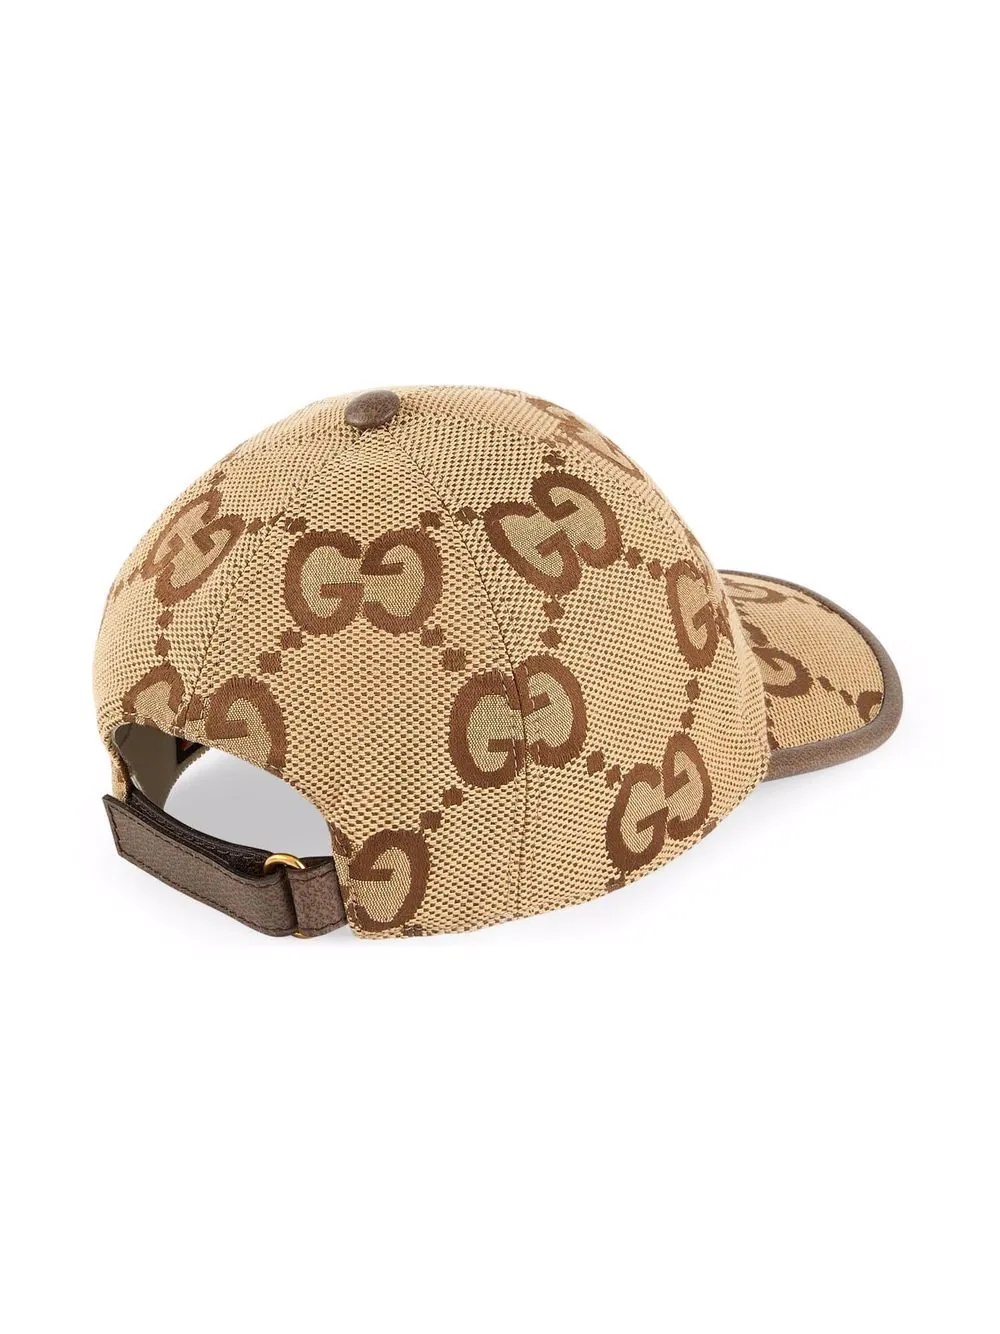 GG Supreme baseball cap - 2